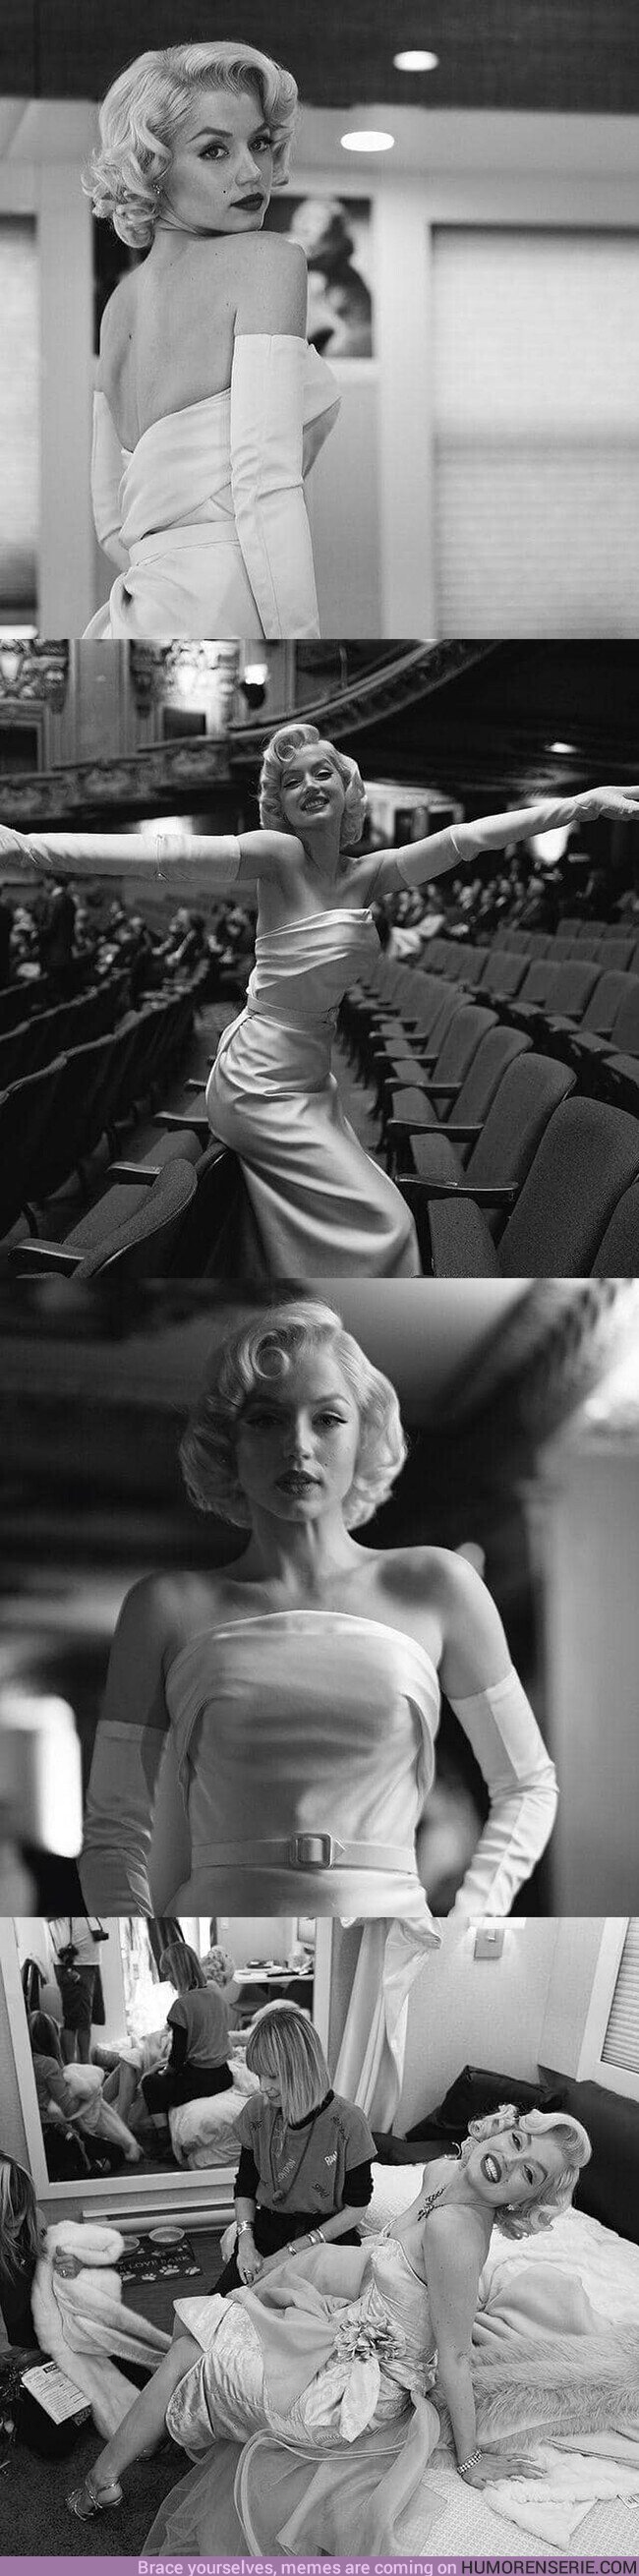 145007 - Ana de Armas caracterizada como Marilyn Monroe para 'Blonde'